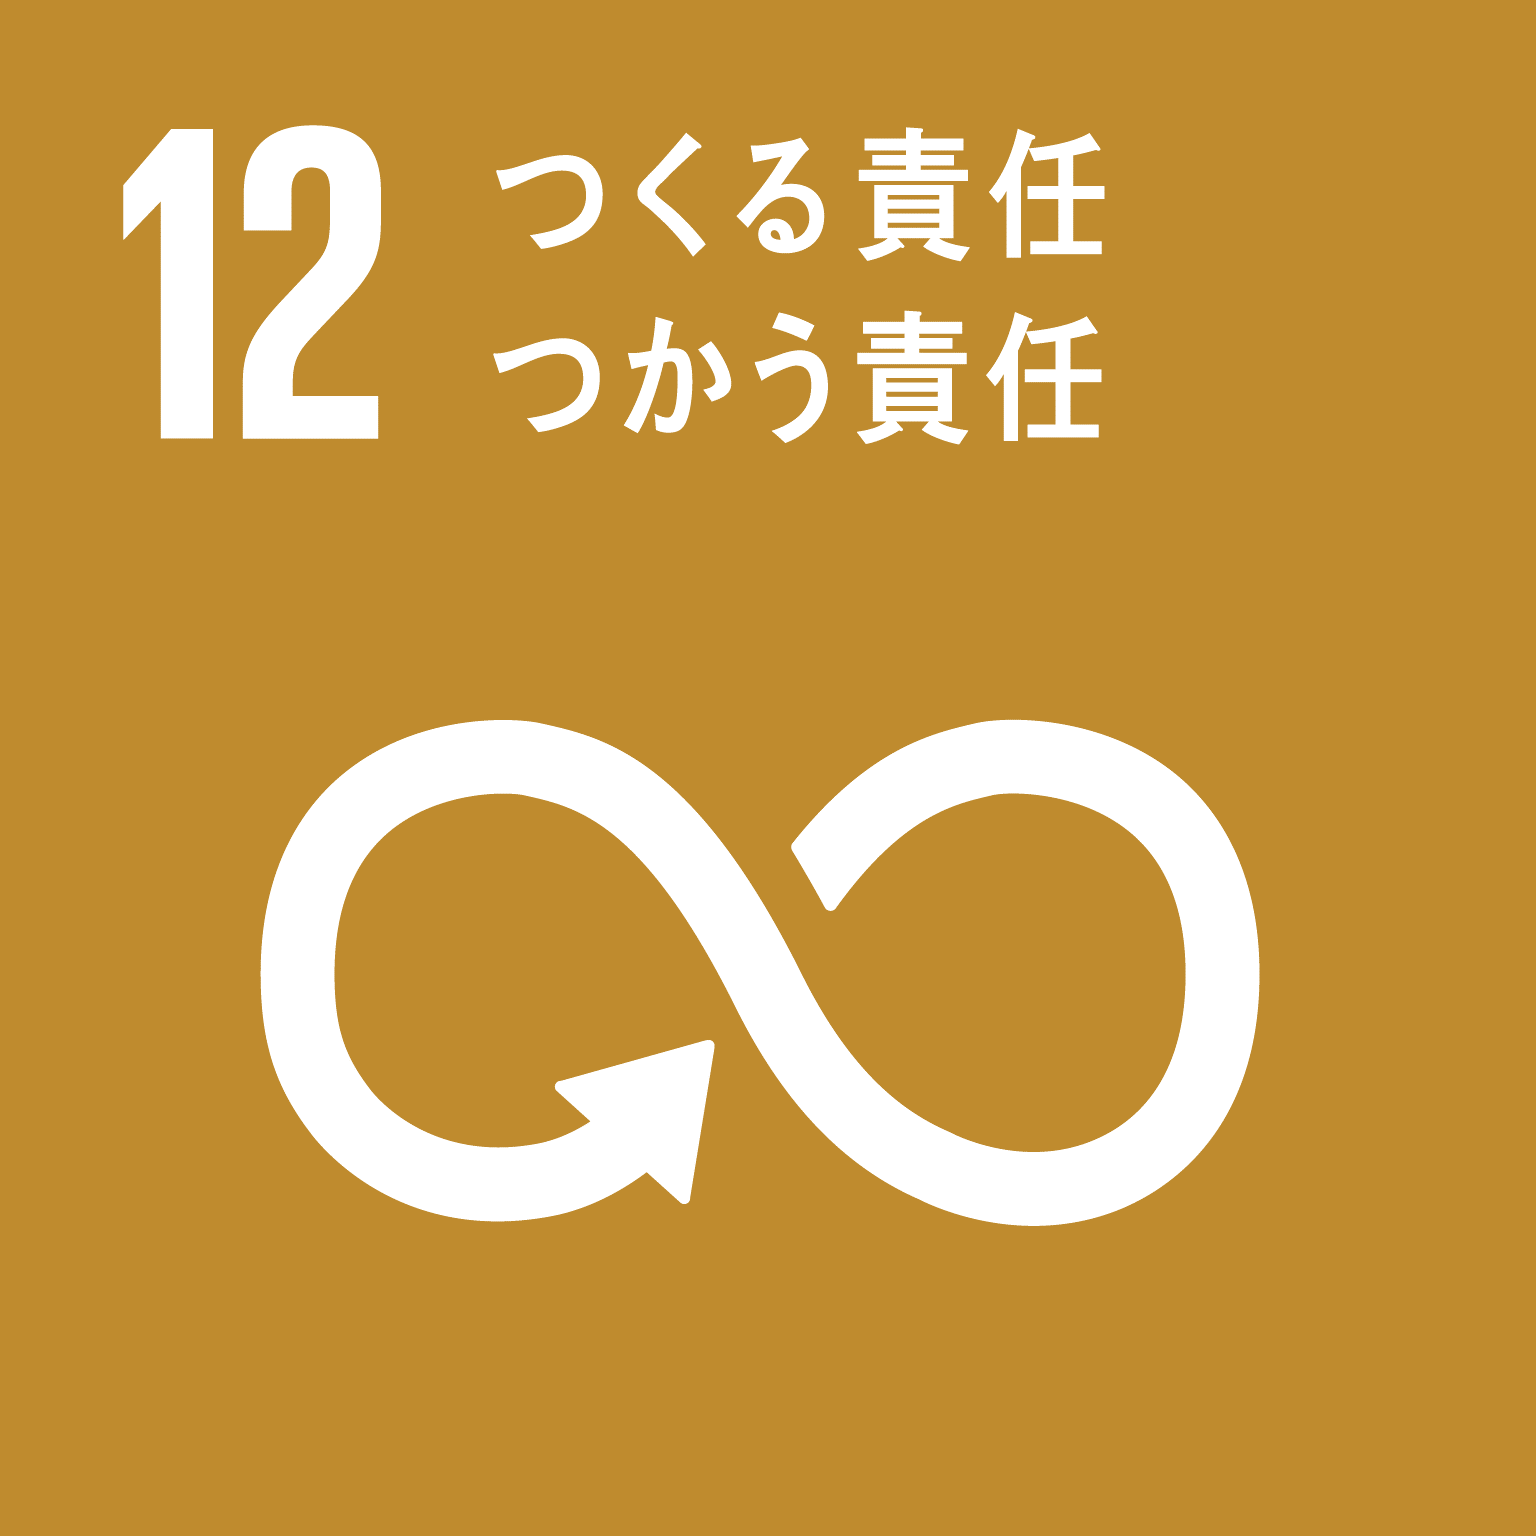 SDGs GOAL 12